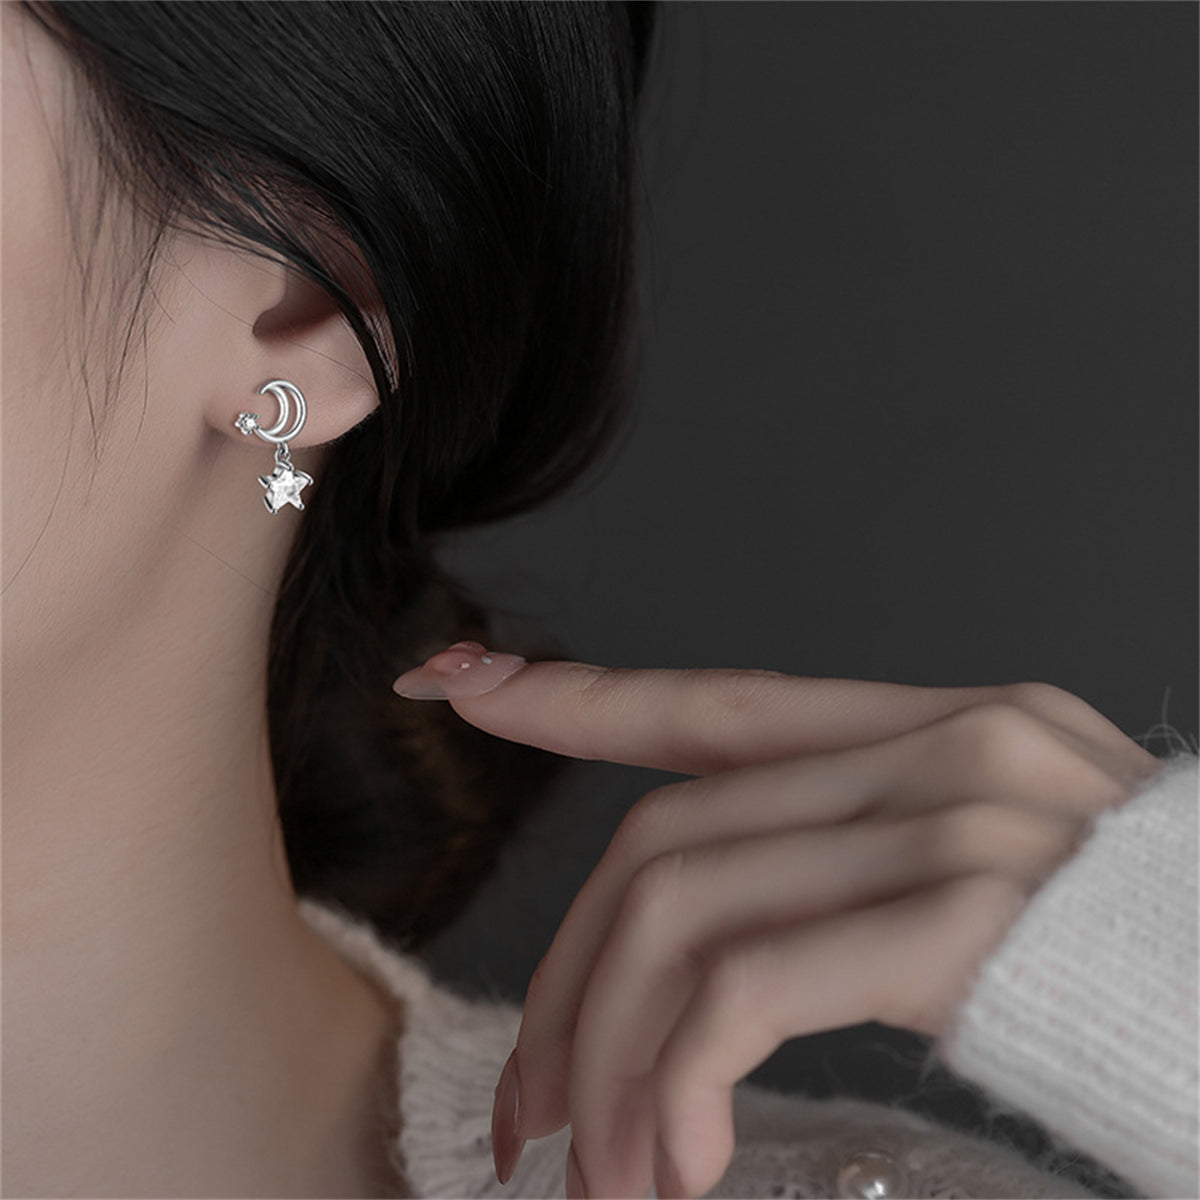 Cubic Zirconia & Silver-Plated Moon & Star Drop Earrings